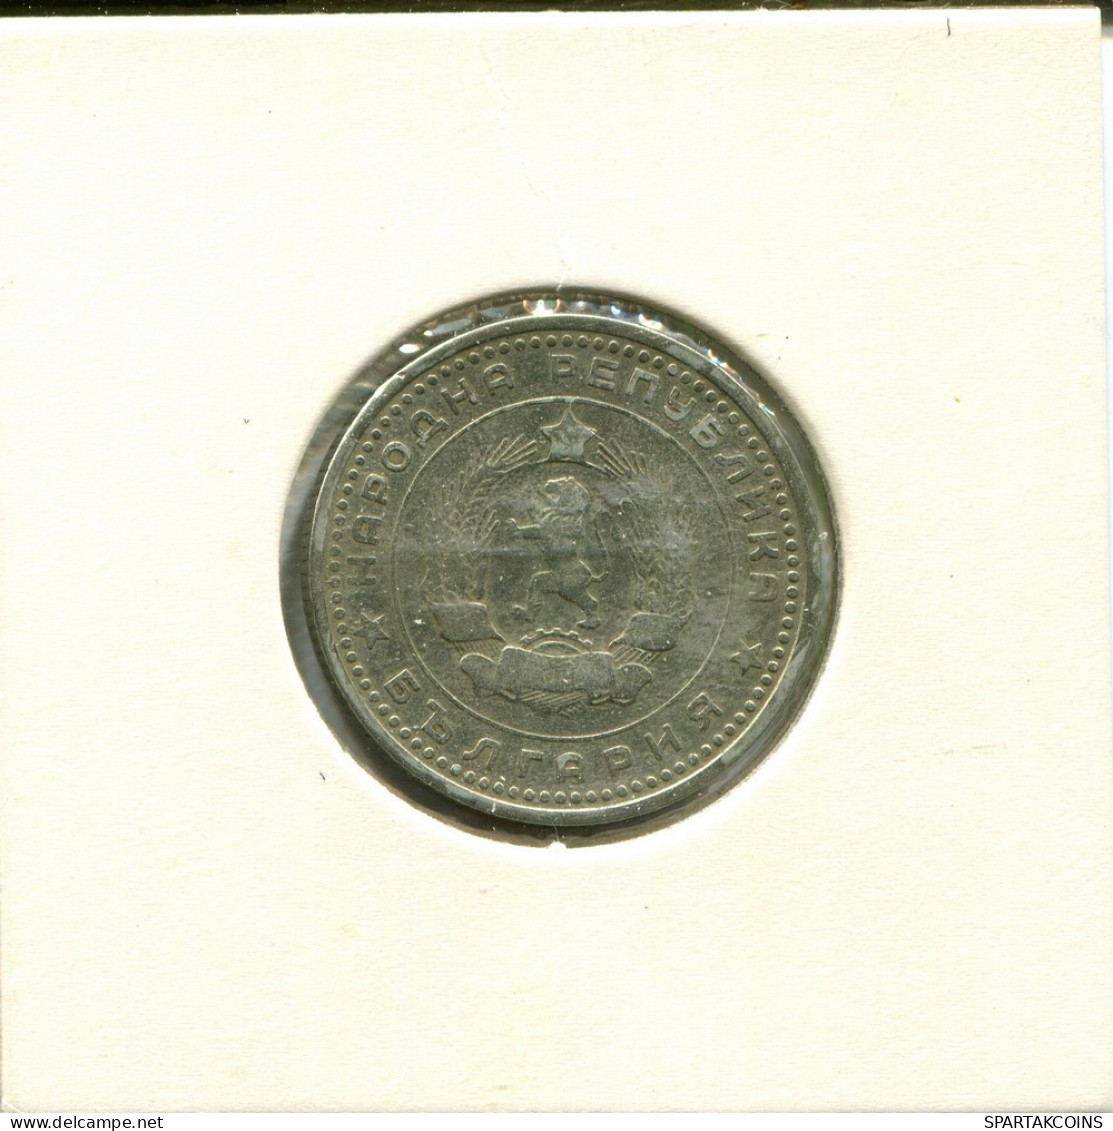 50 STOTINKI 1962 BULGARIA Coin #AU763.U.A - Bulgarije